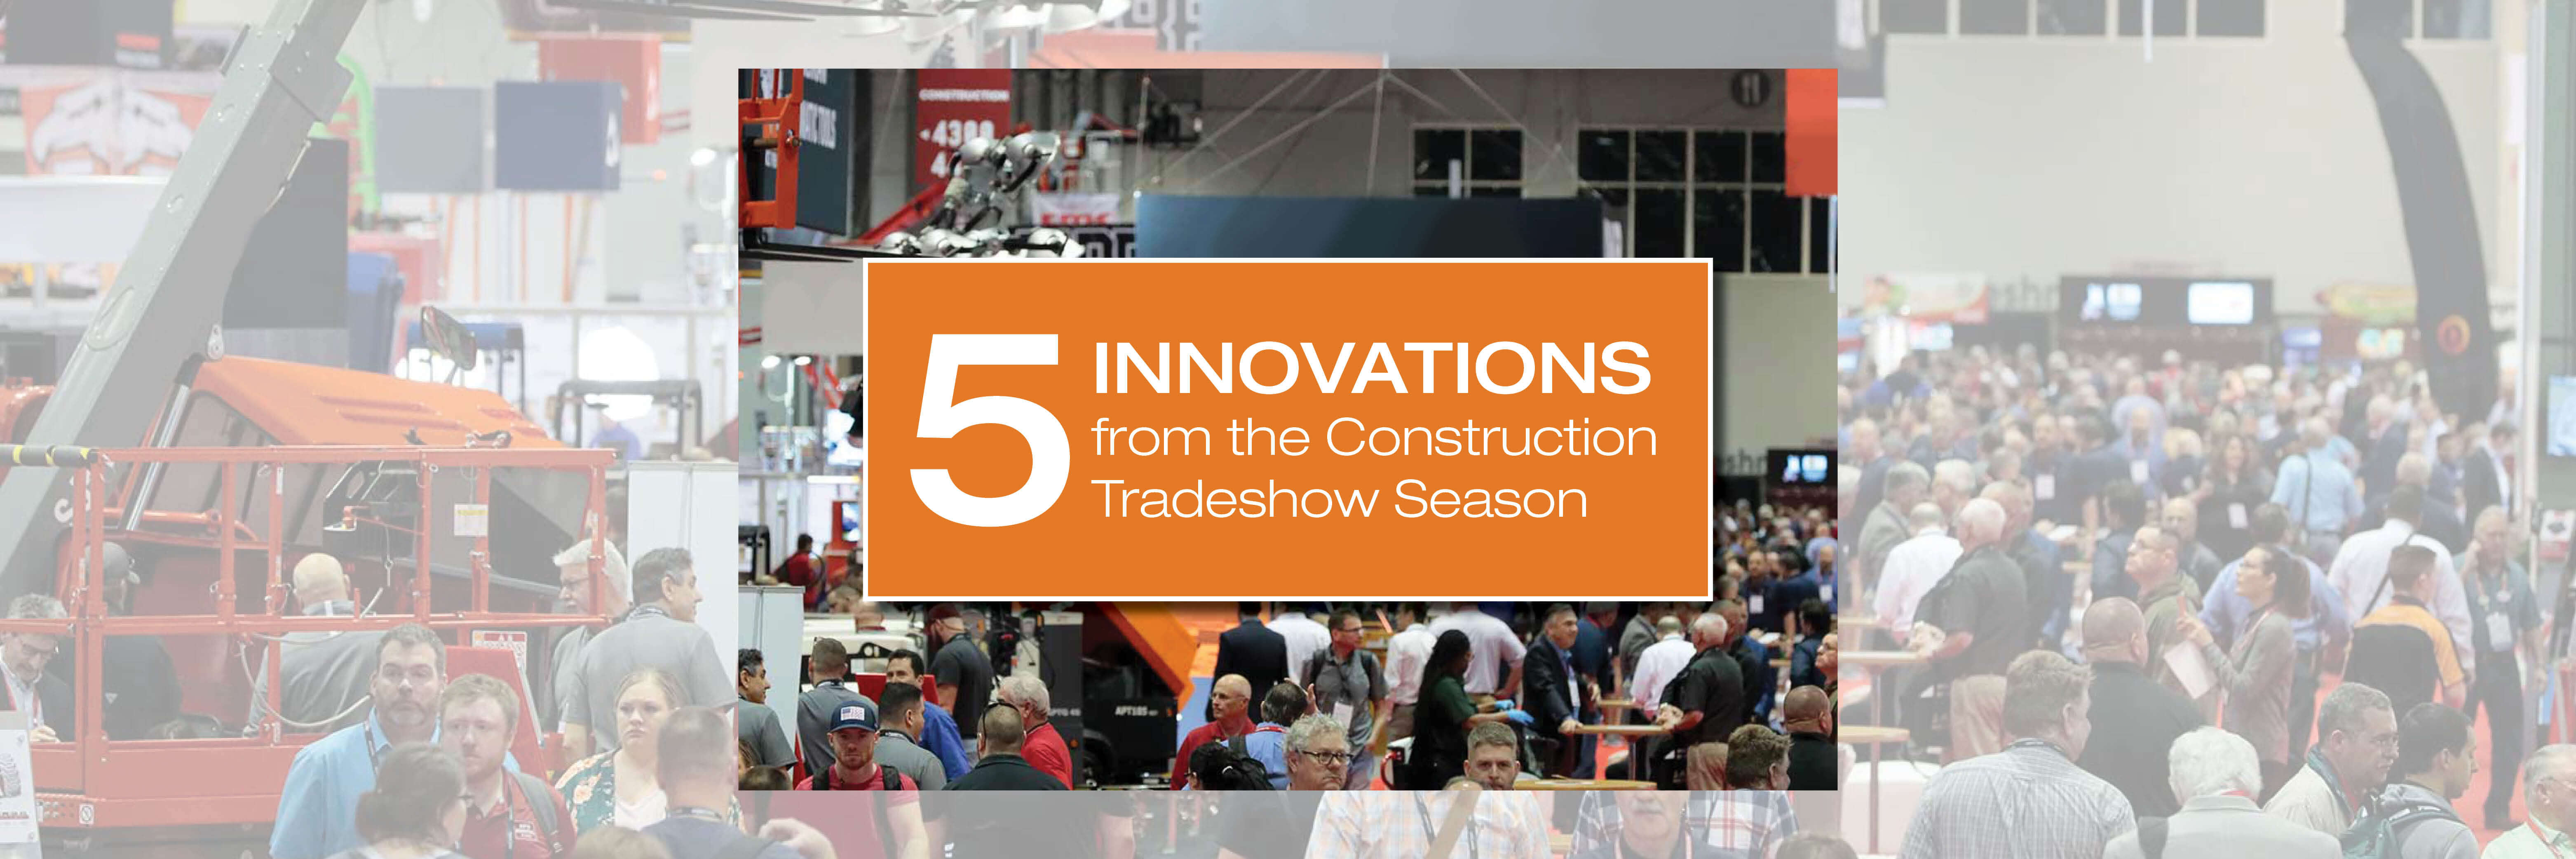 5 Innovations from the Construction Tradeshow Season